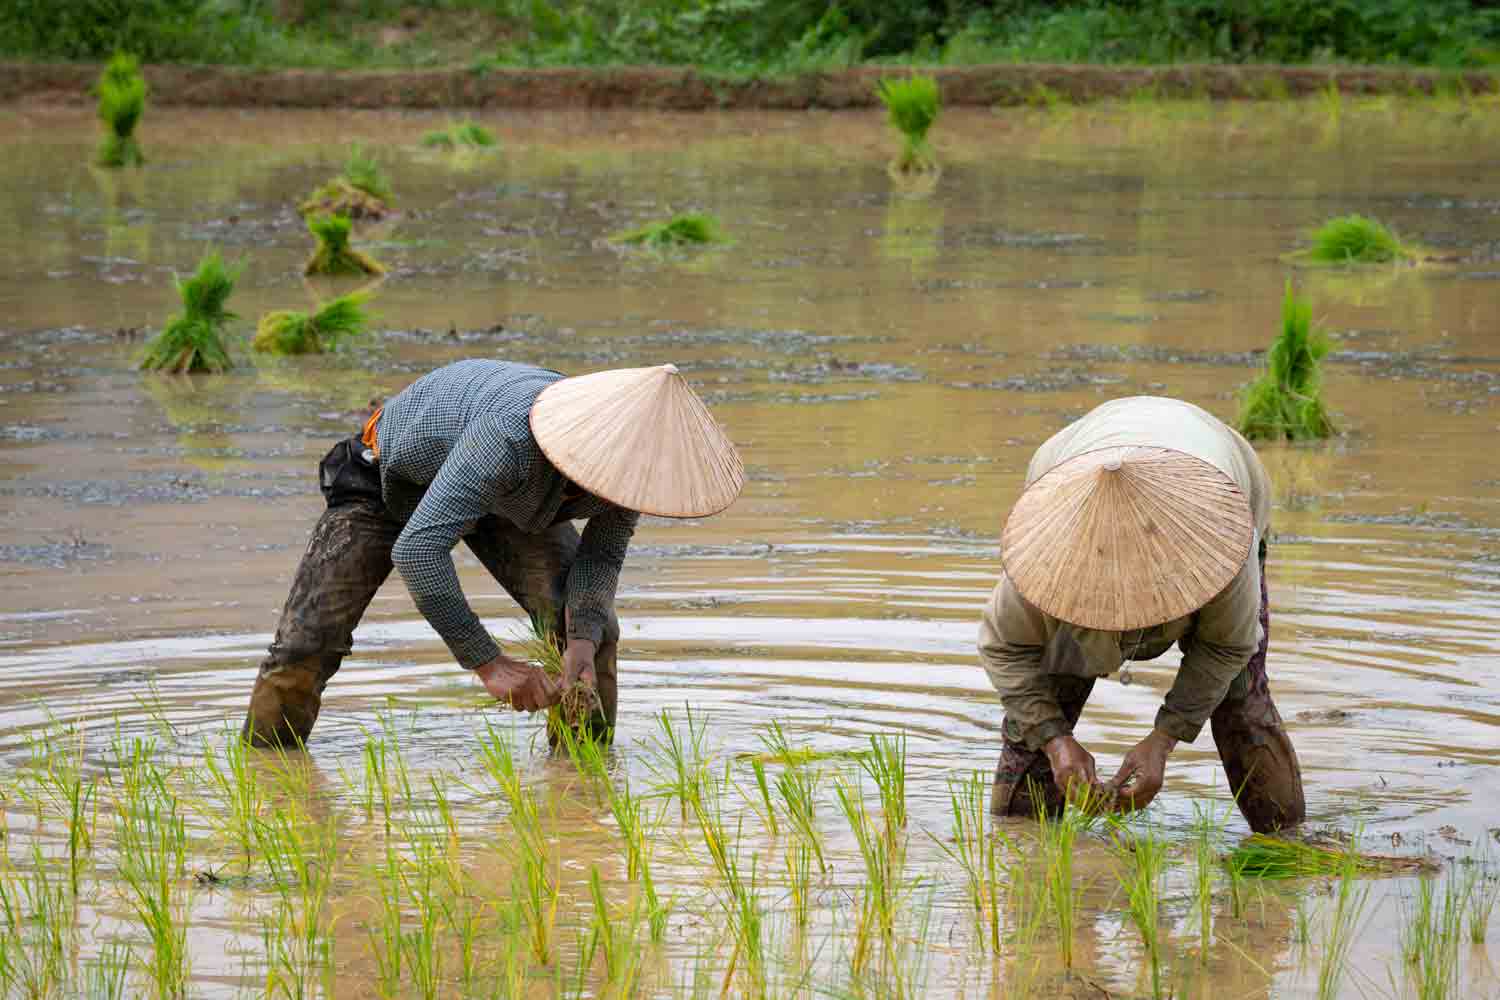 LAOS | AUG. 05, 2020 — No Rice for Christians